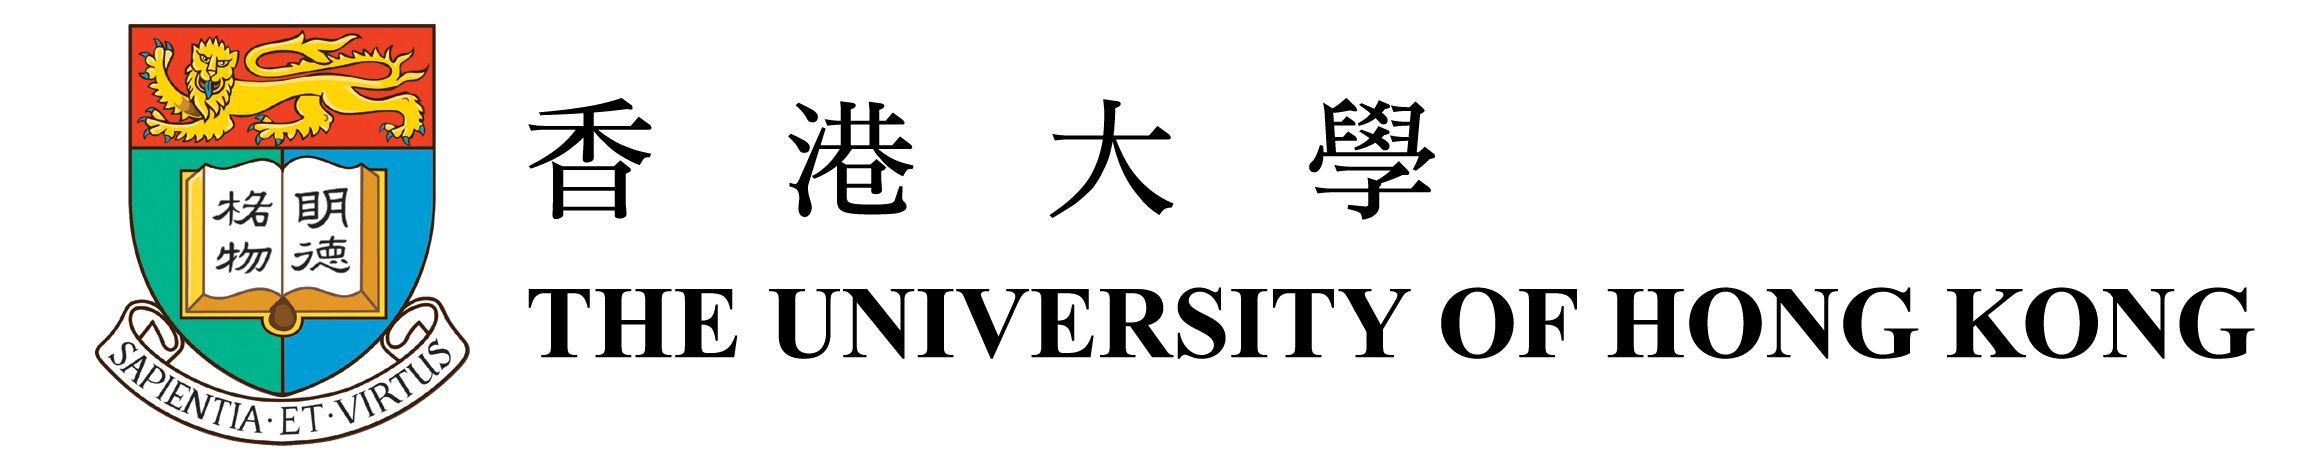 HKU Logo - HKU Number Theory Days 2019